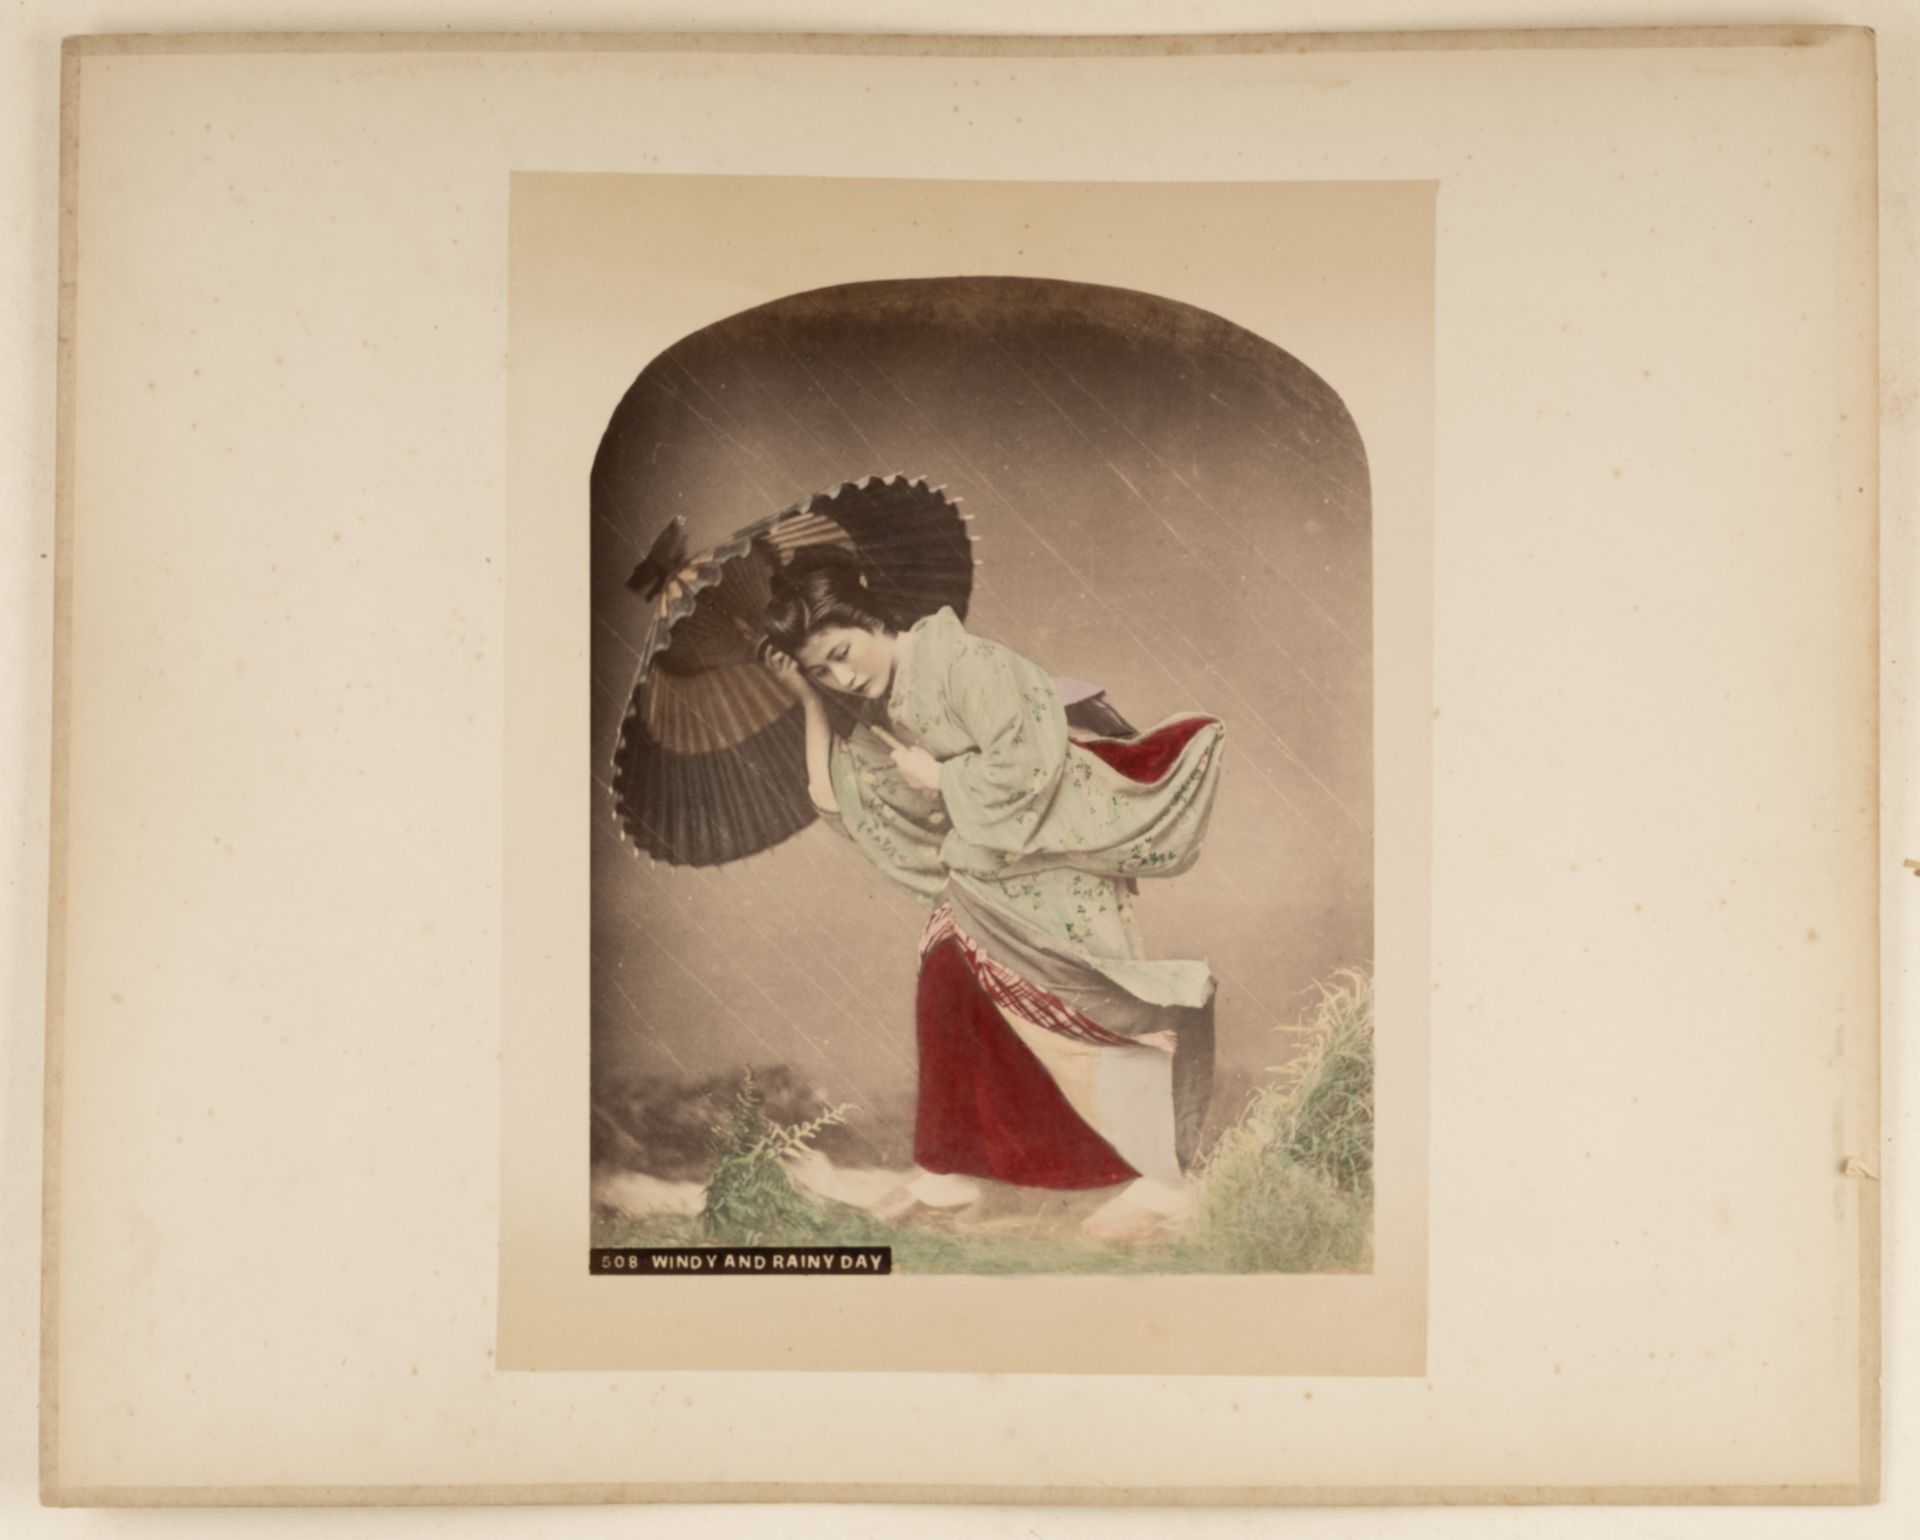 Null 草部金兵 (1841-1934)

"大风大雨天，雨中的日本人，约1880年

彩色高光的相纸印刷品，图像中的标题和编号为508号

20 x 25厘&hellip;